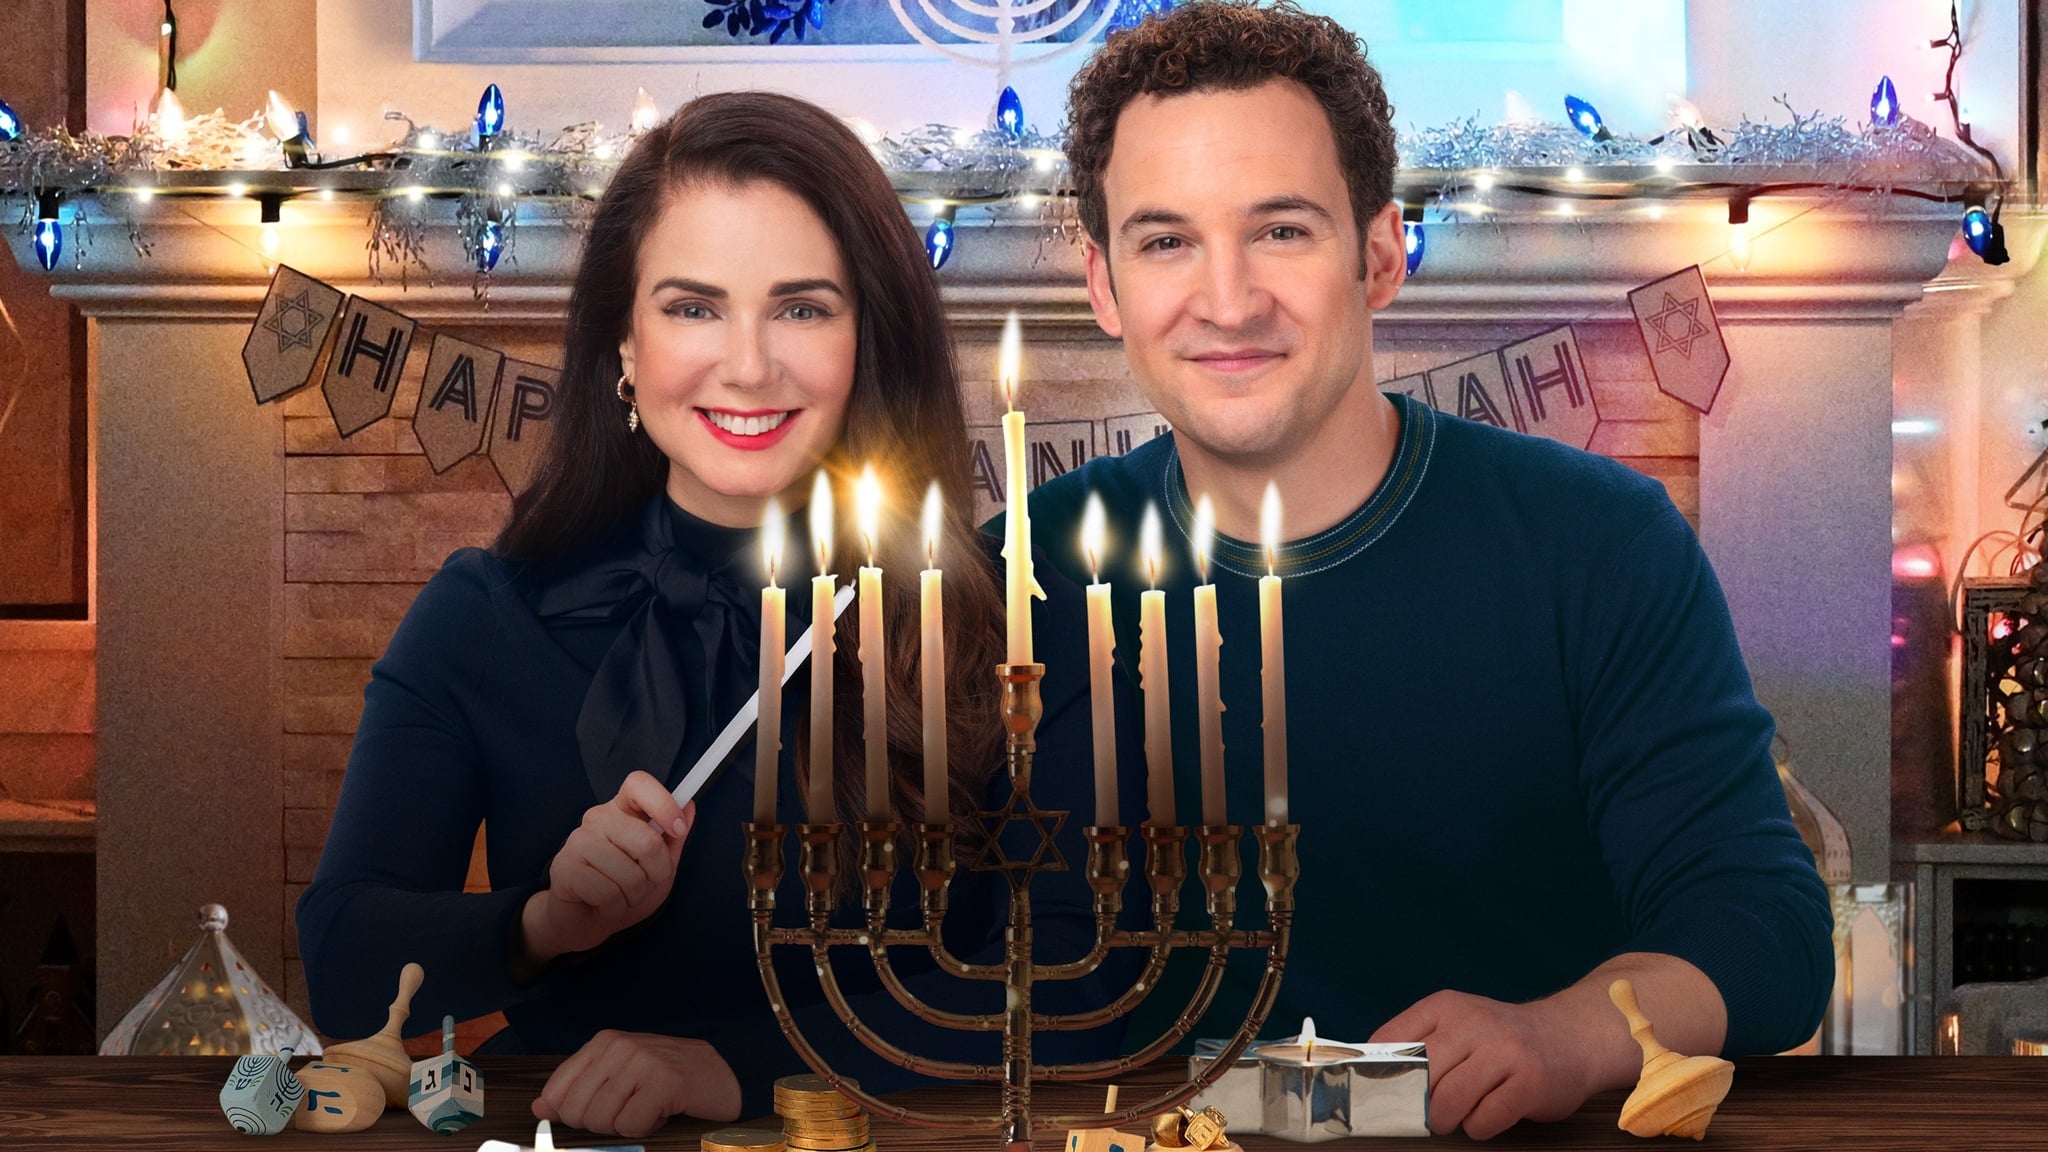 Love, Lights, Hanukkah! 2020 123movies